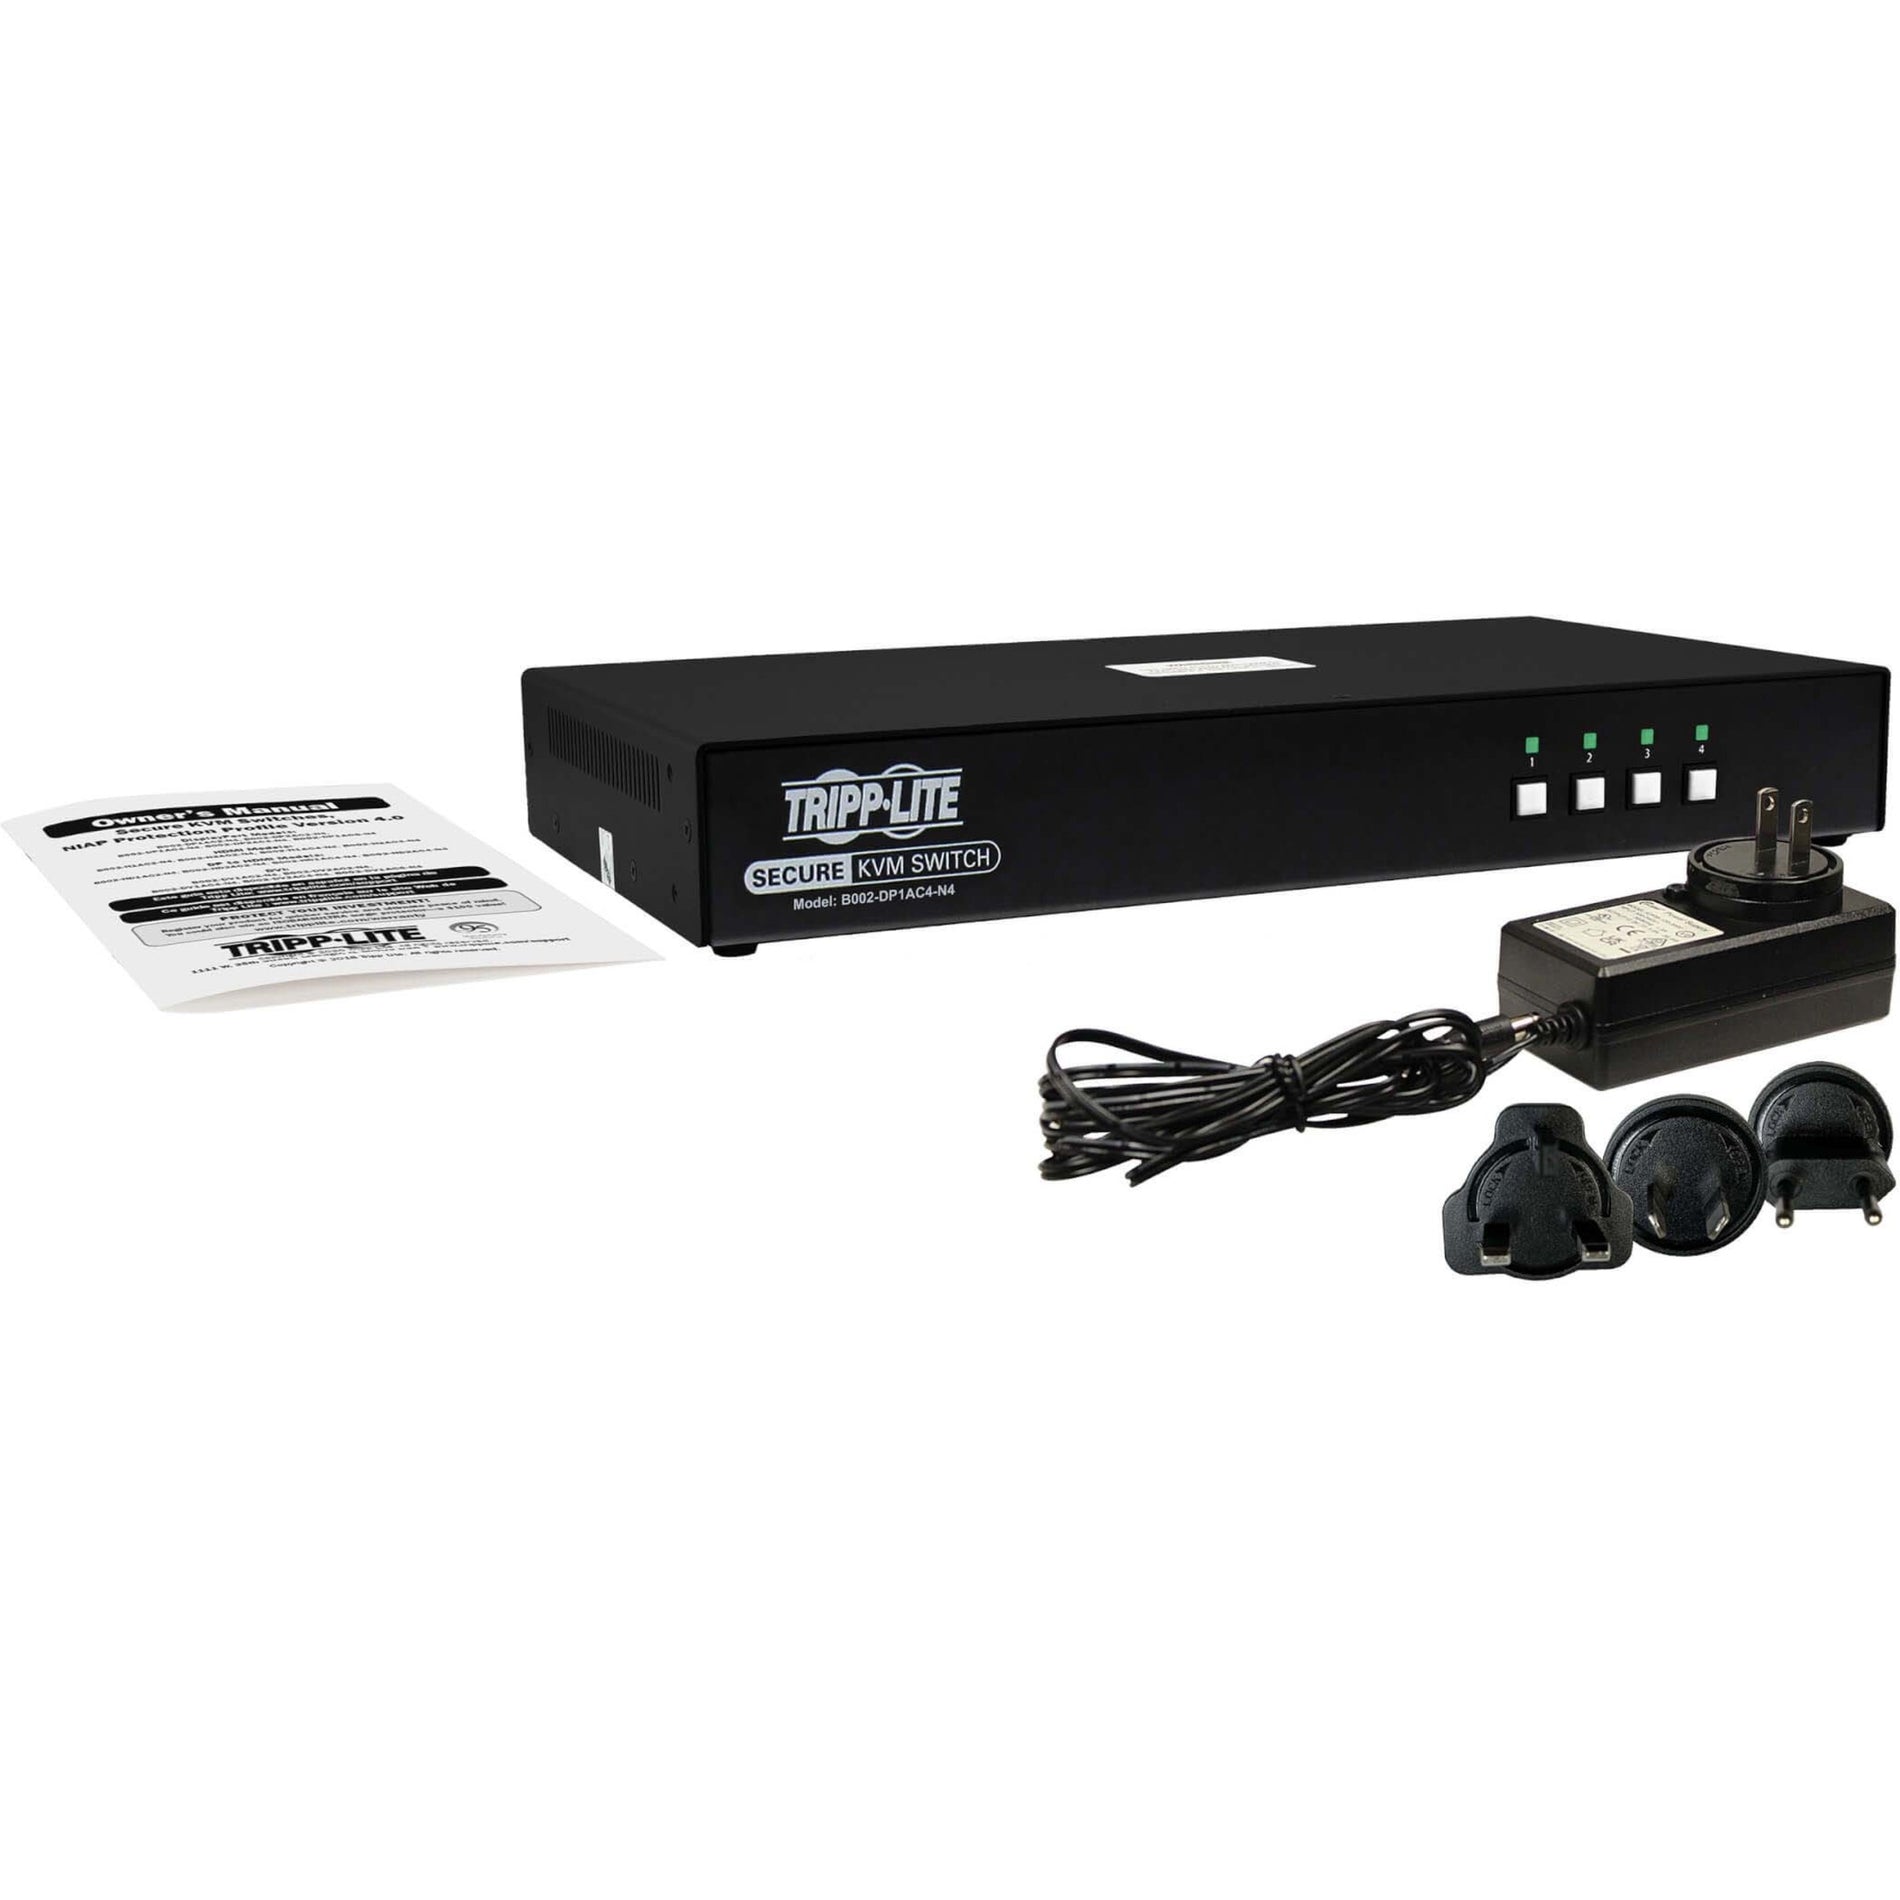 Tripp Lite B002-DP1AC4-N4 KVM Switchbox, 4 Computers Supported, USB, DisplayPort, 3840 x 2160 Resolution, 3 Year Warranty